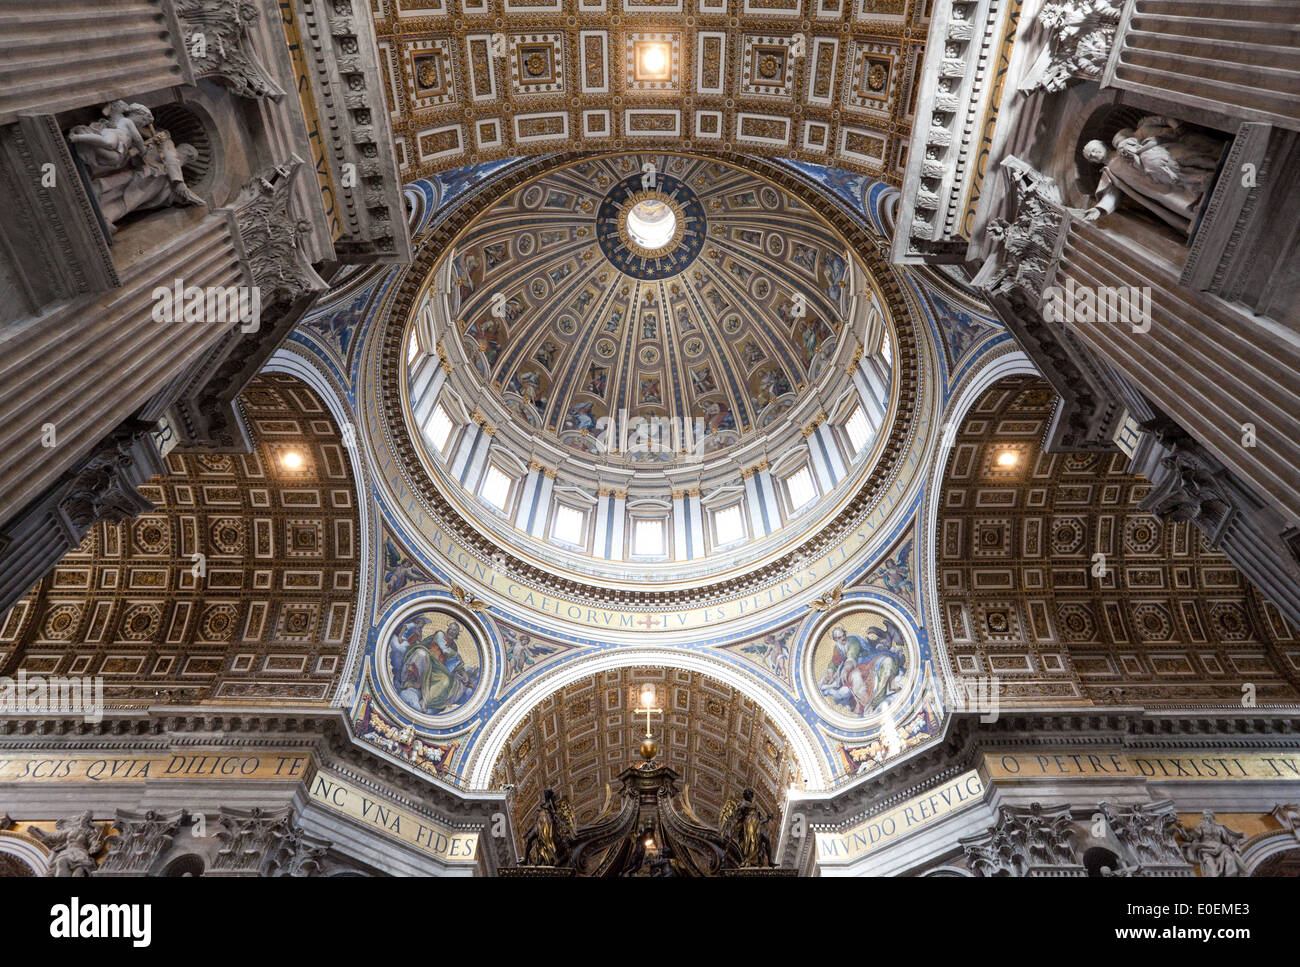 Petersdom, Vatikan - Basilica di San Pietro e Città del Vaticano Foto Stock